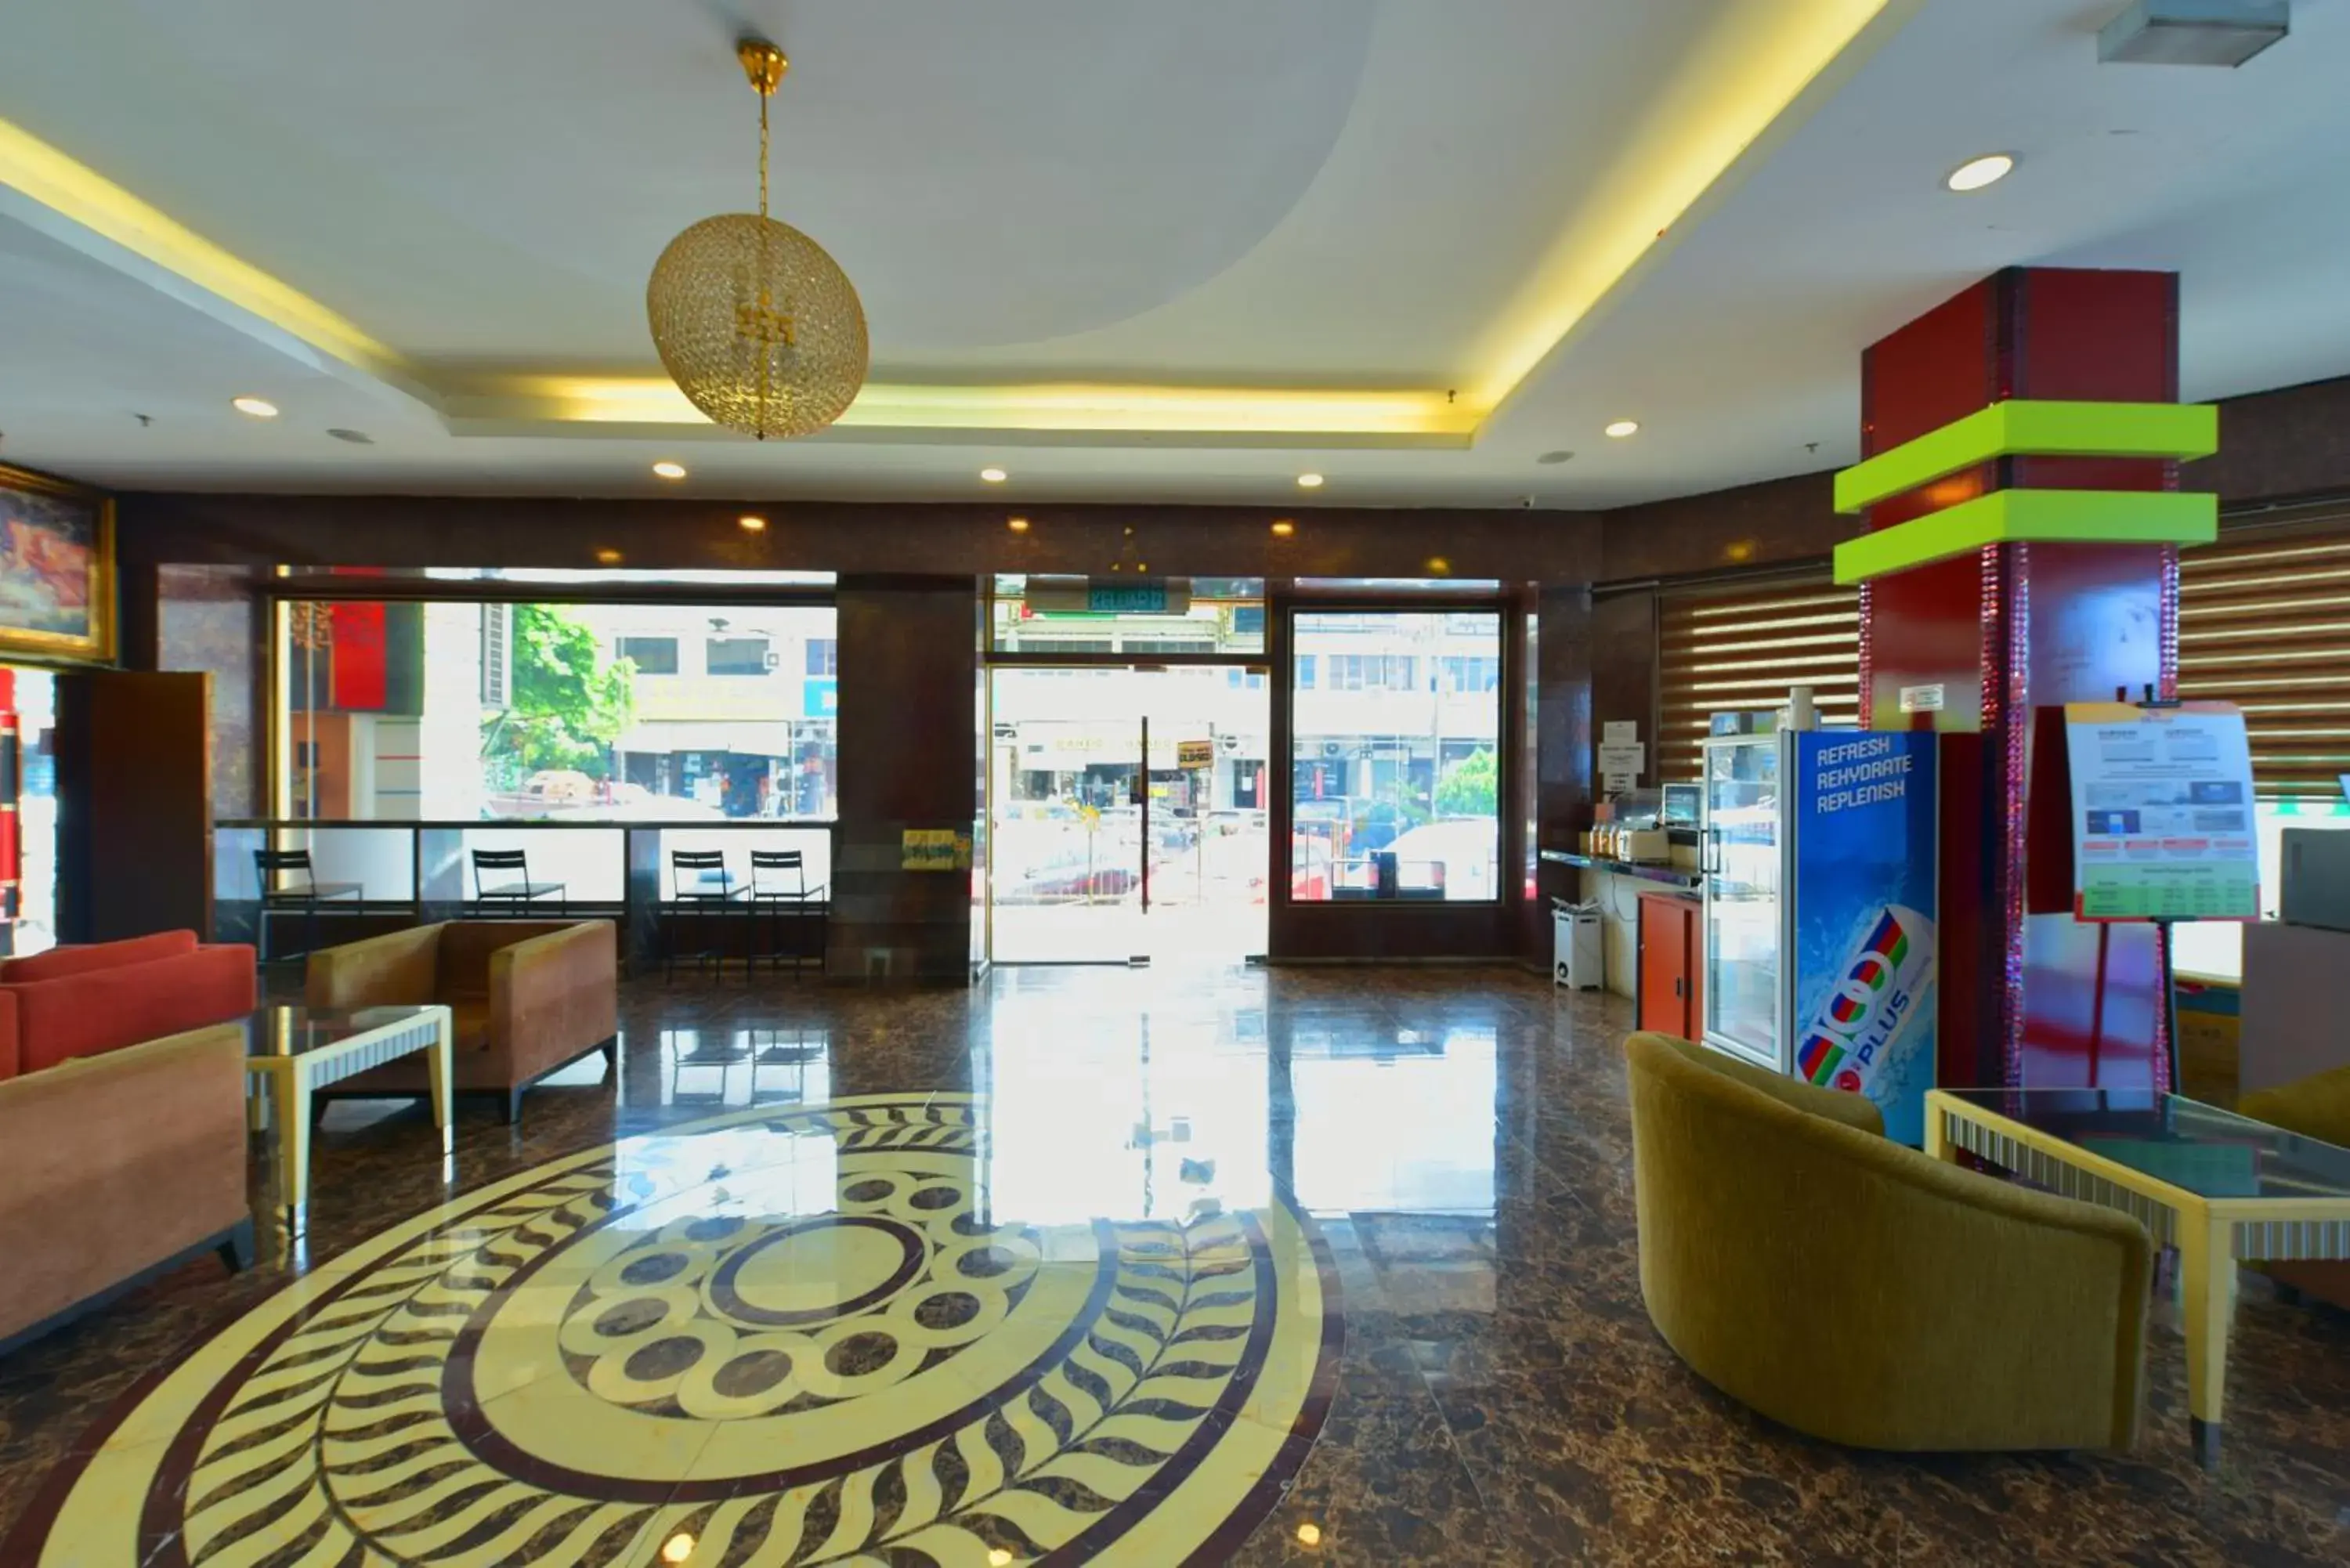 Lobby or reception, Lobby/Reception in Townhouse OAK Hotel Holmes Johor Jaya